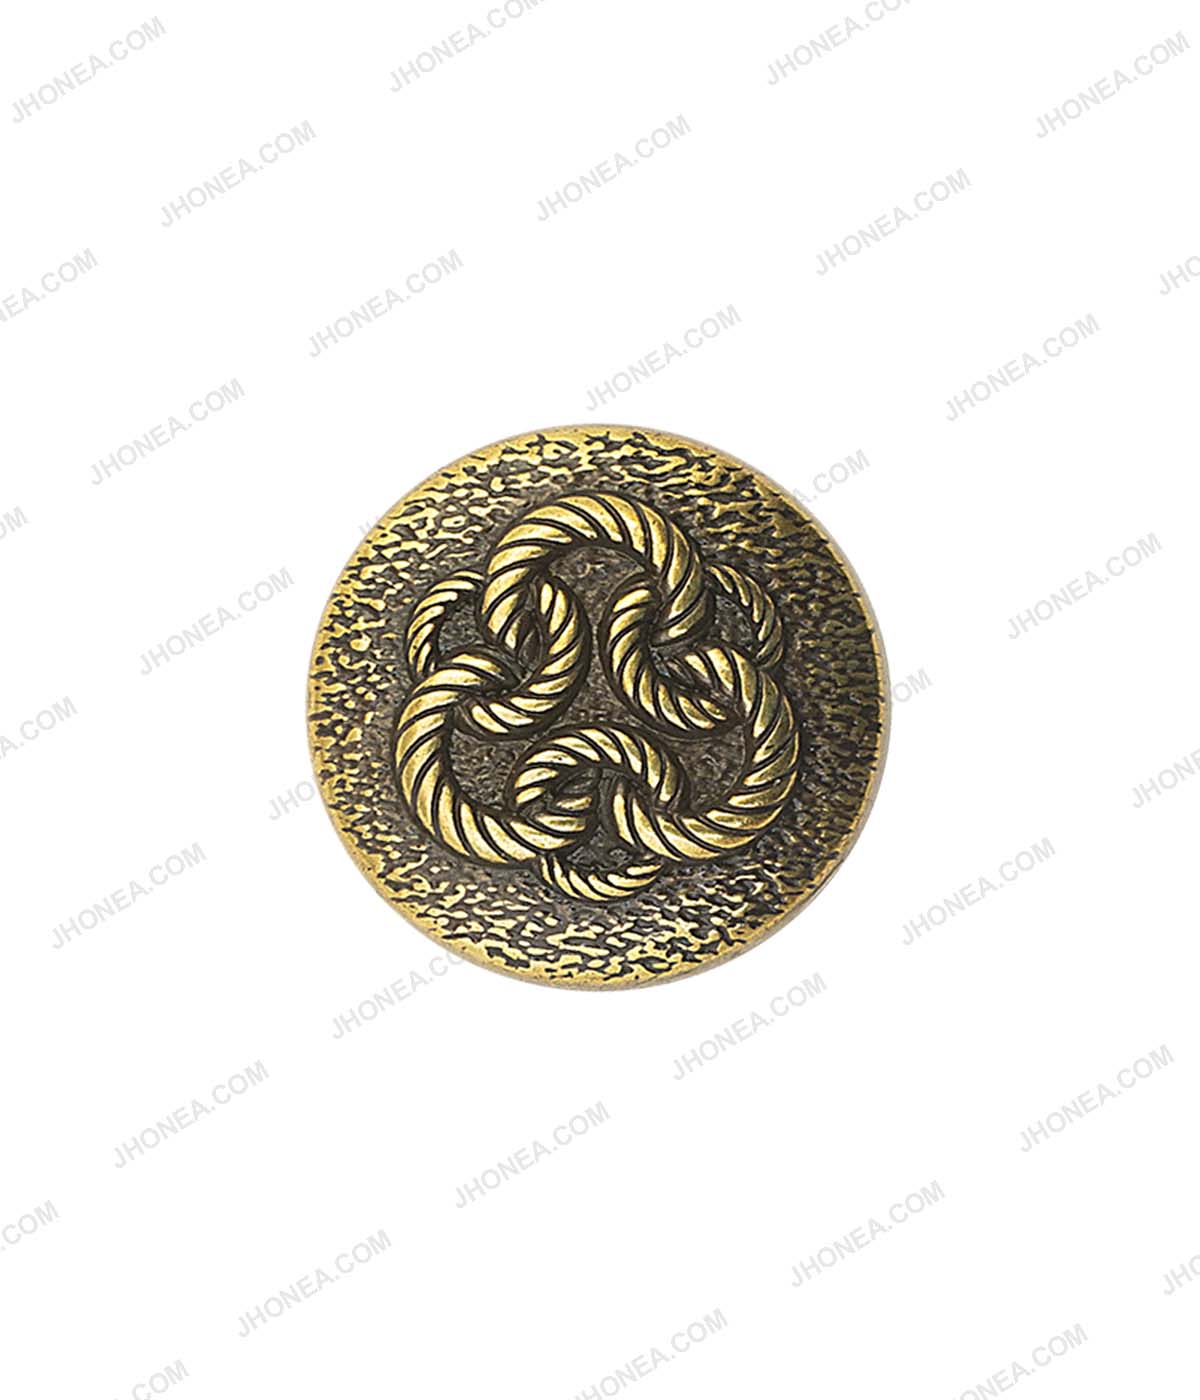 Celtic Design Antique Metal Shank Button for Men's Clothing